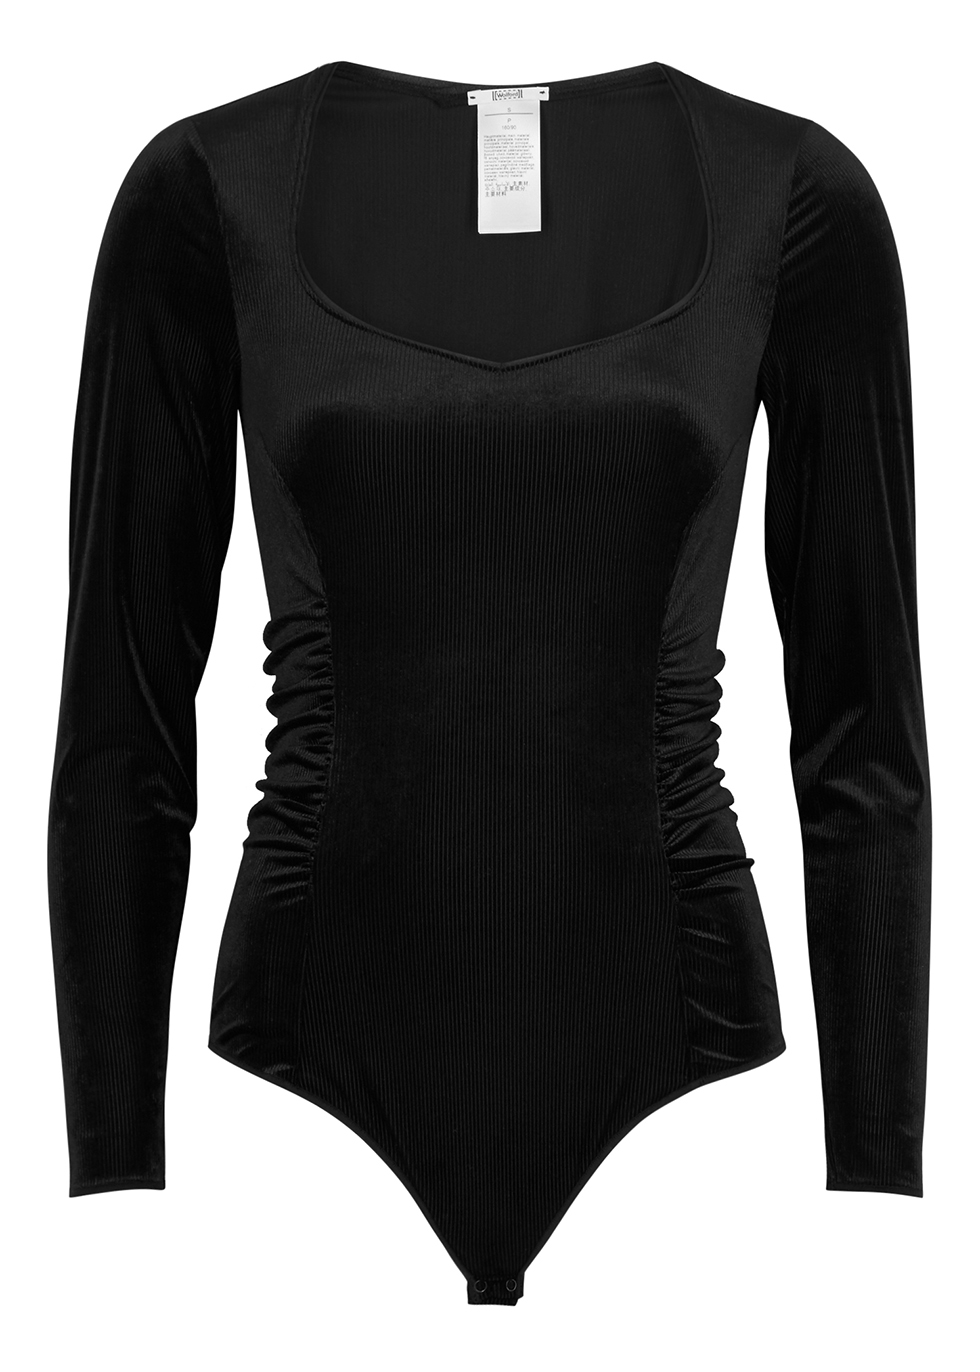 Discount of 54% Wolford Esmeralda black velour bodysuit - on Sale